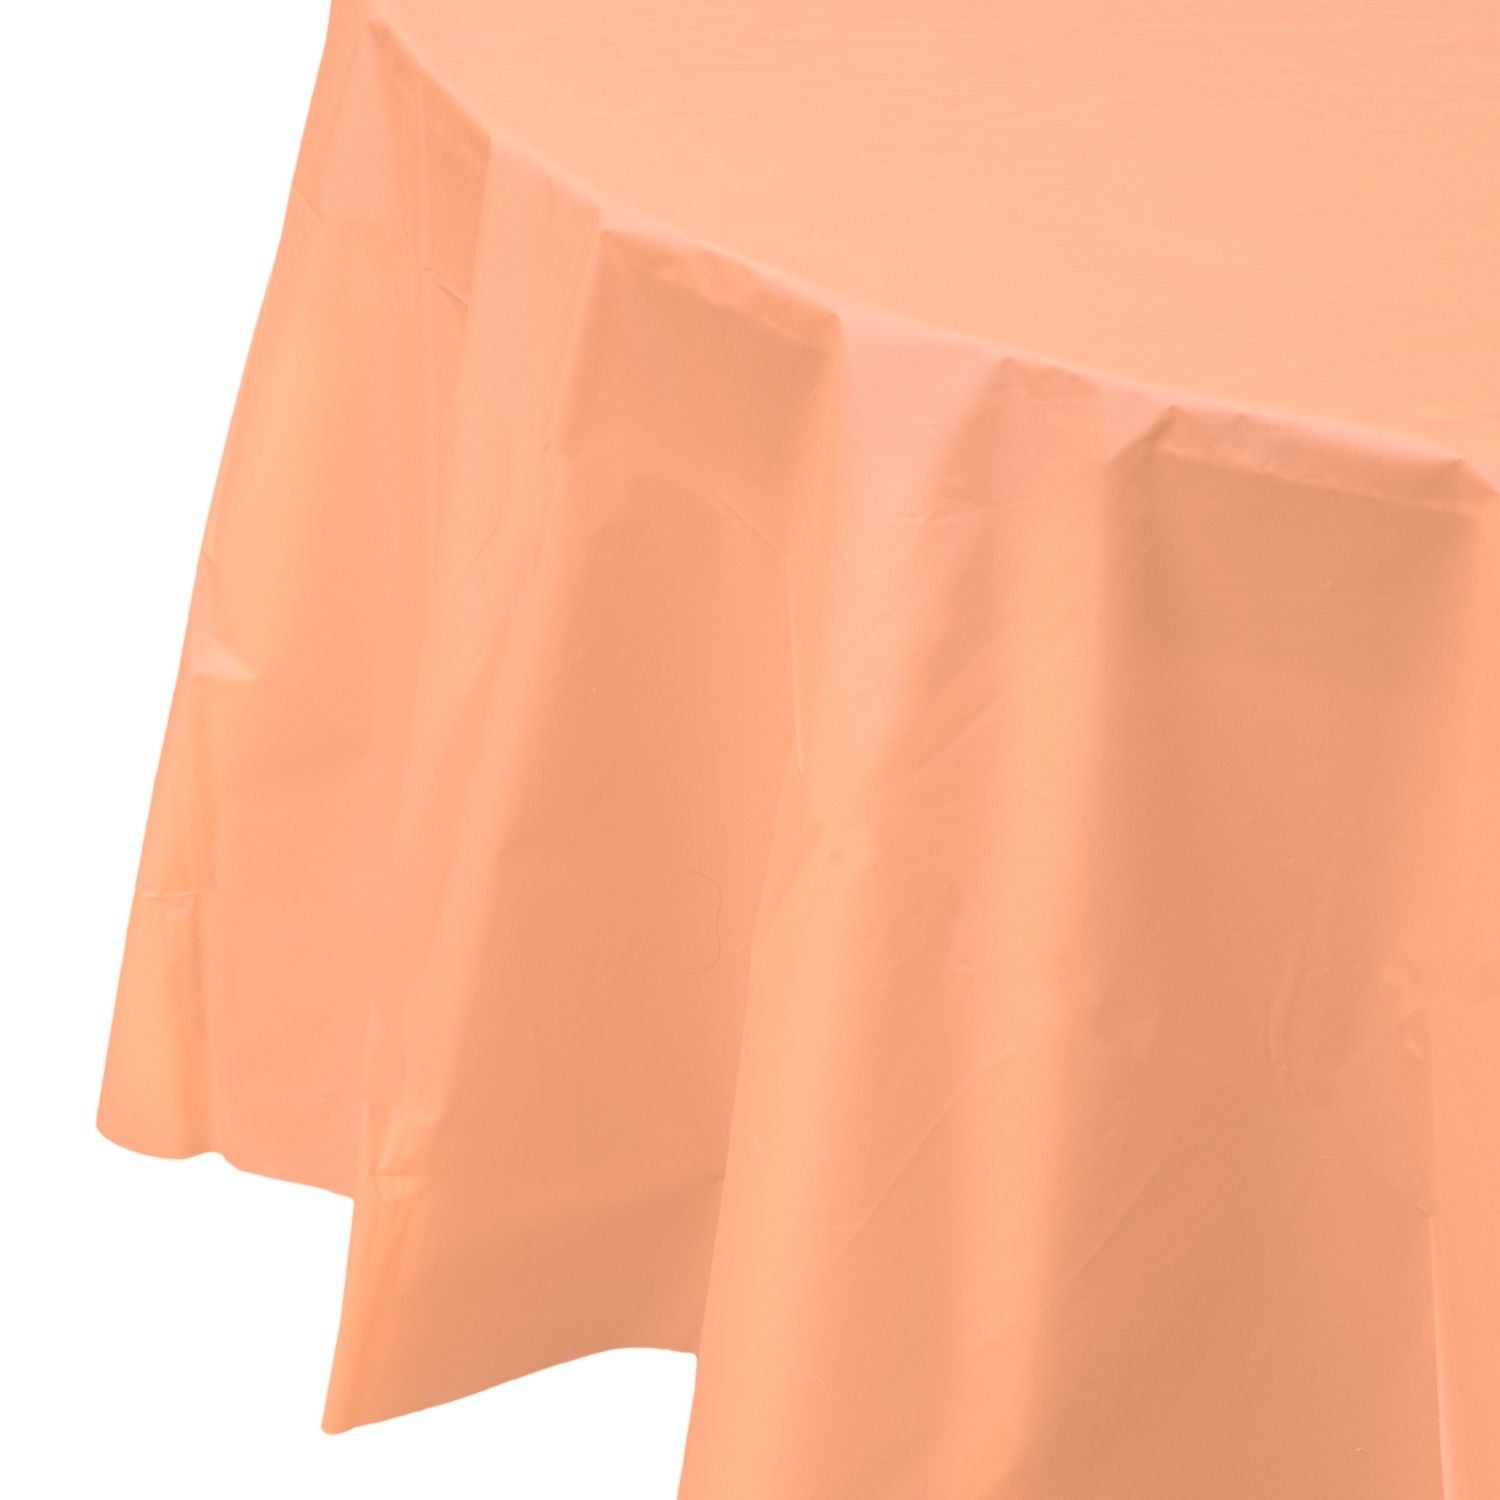 Peach Round Plastic Tablecloth | 48 Count - Yom Tov Settings